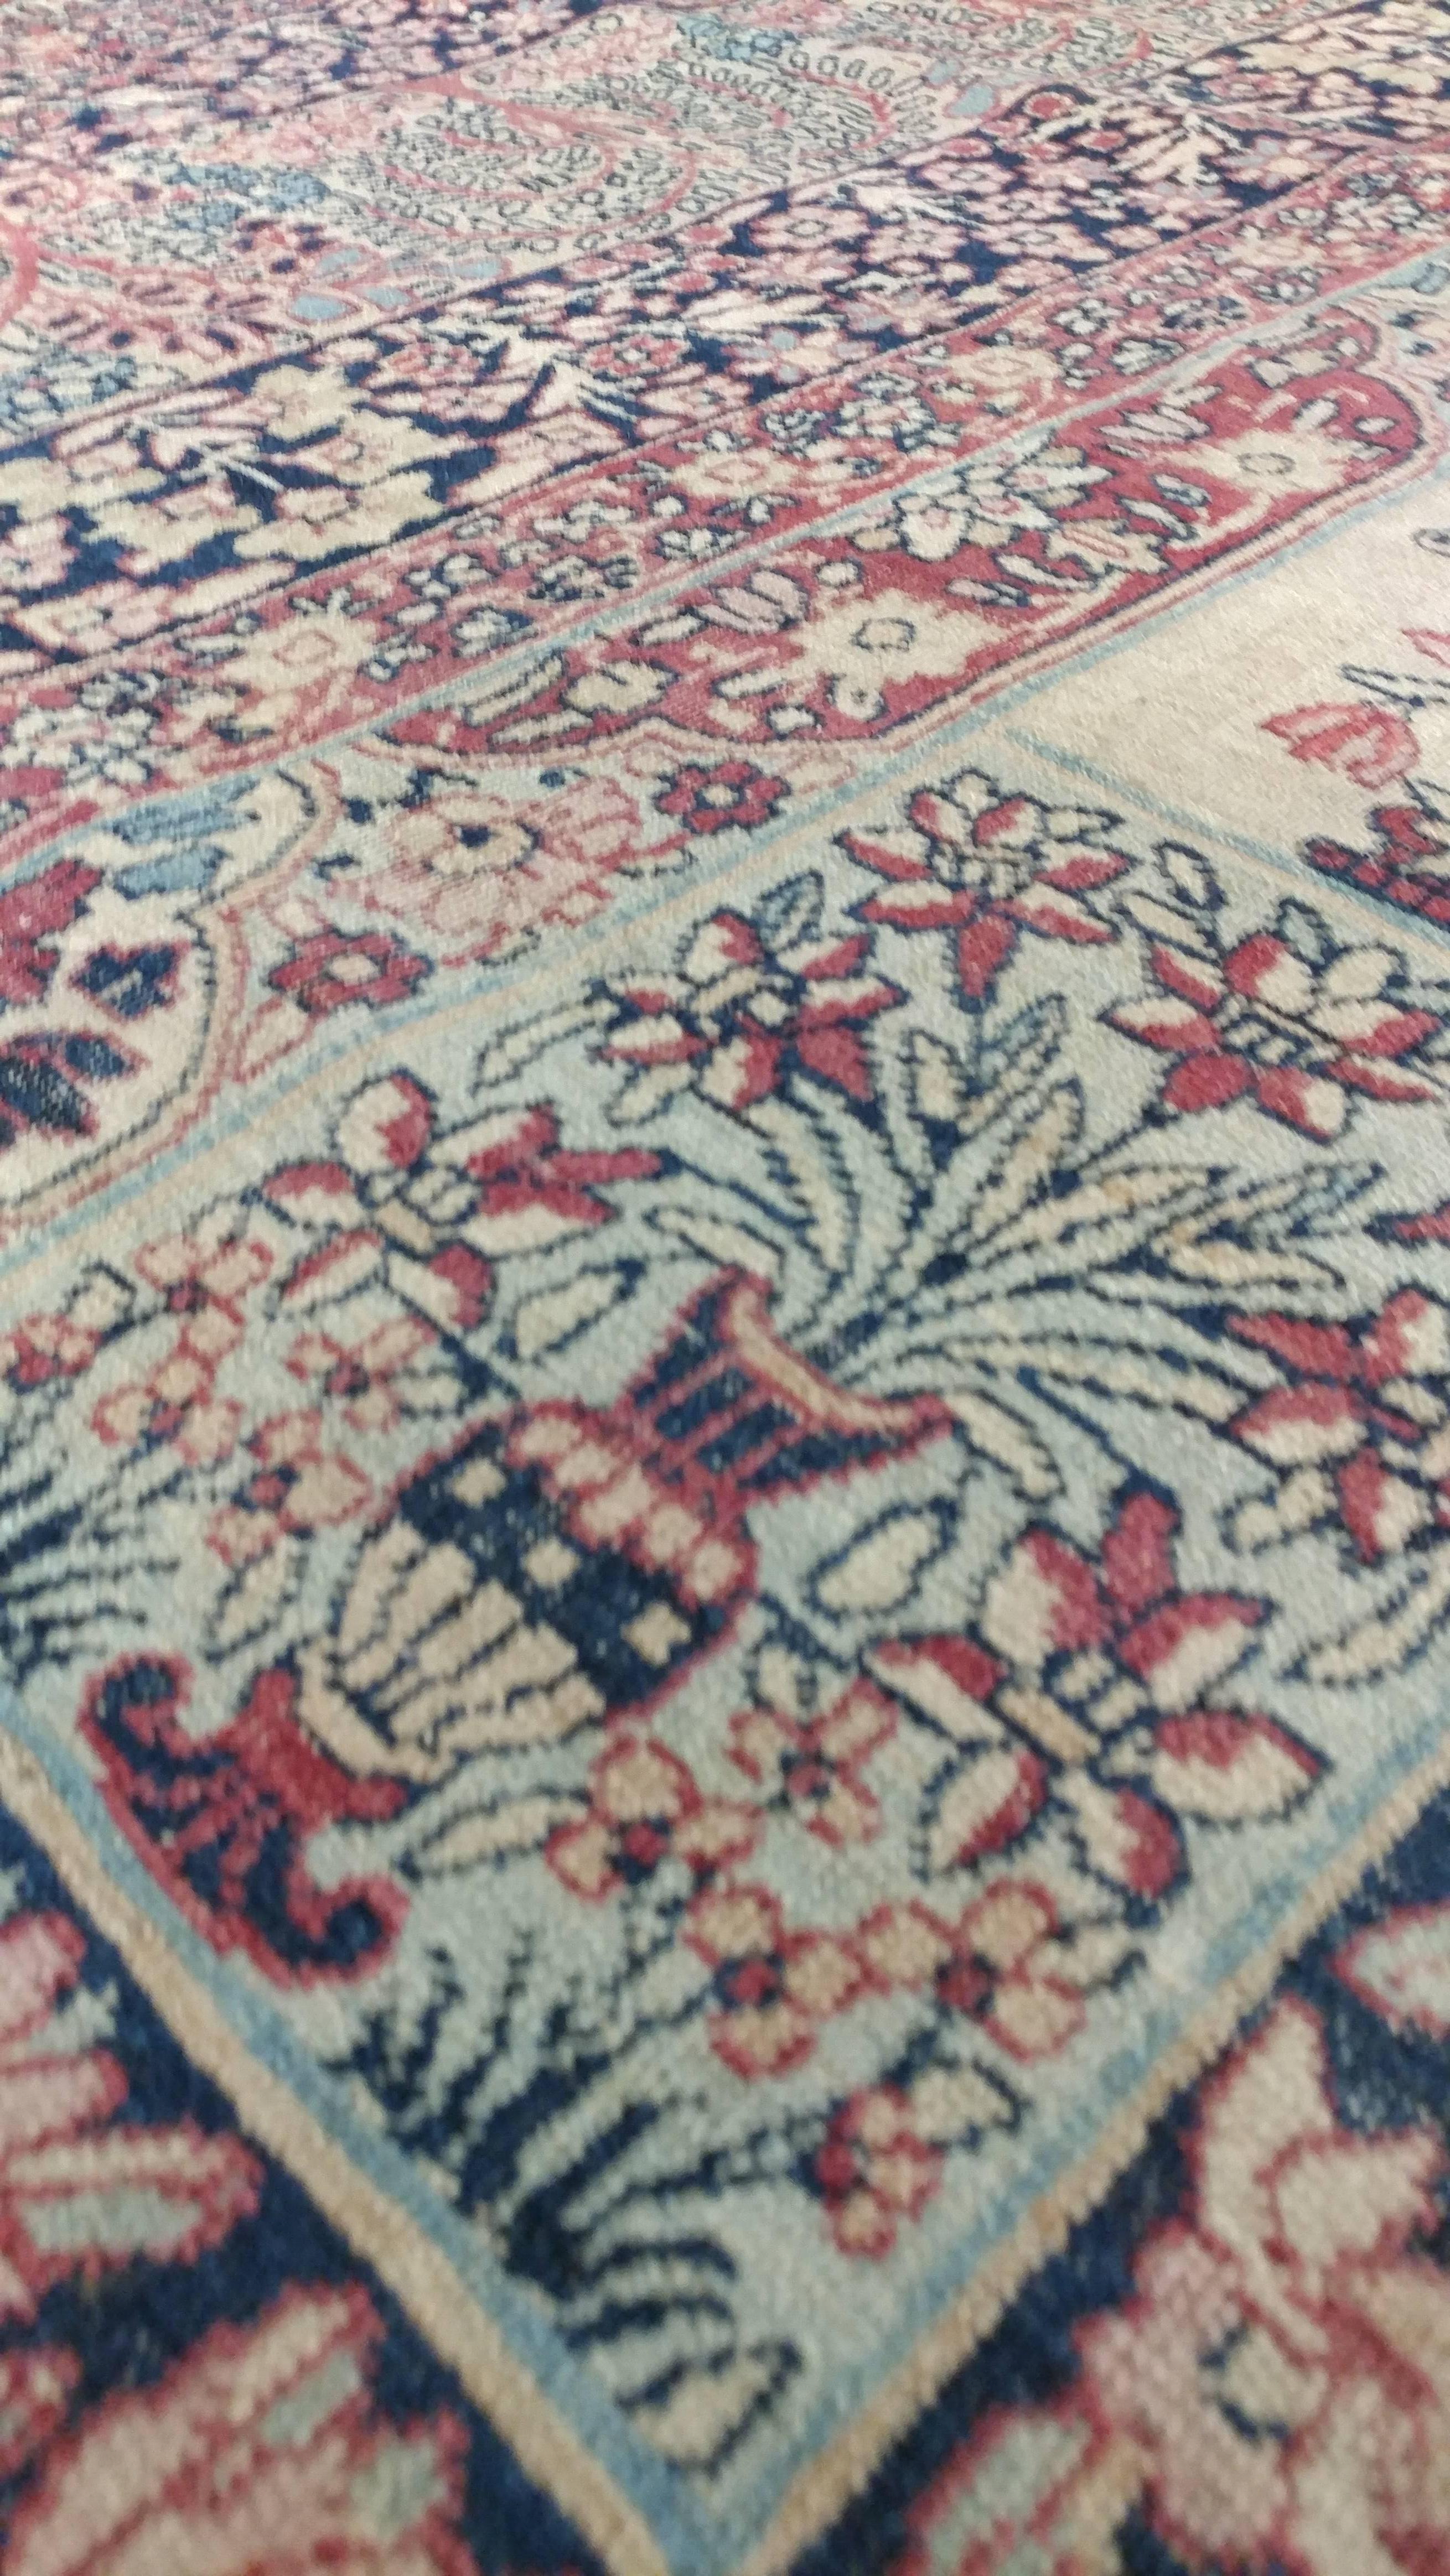 Antique Lavar Kerman Carpet, Handmade Wool Carpet, Multi-Color, Ivory, Red Wine For Sale 1